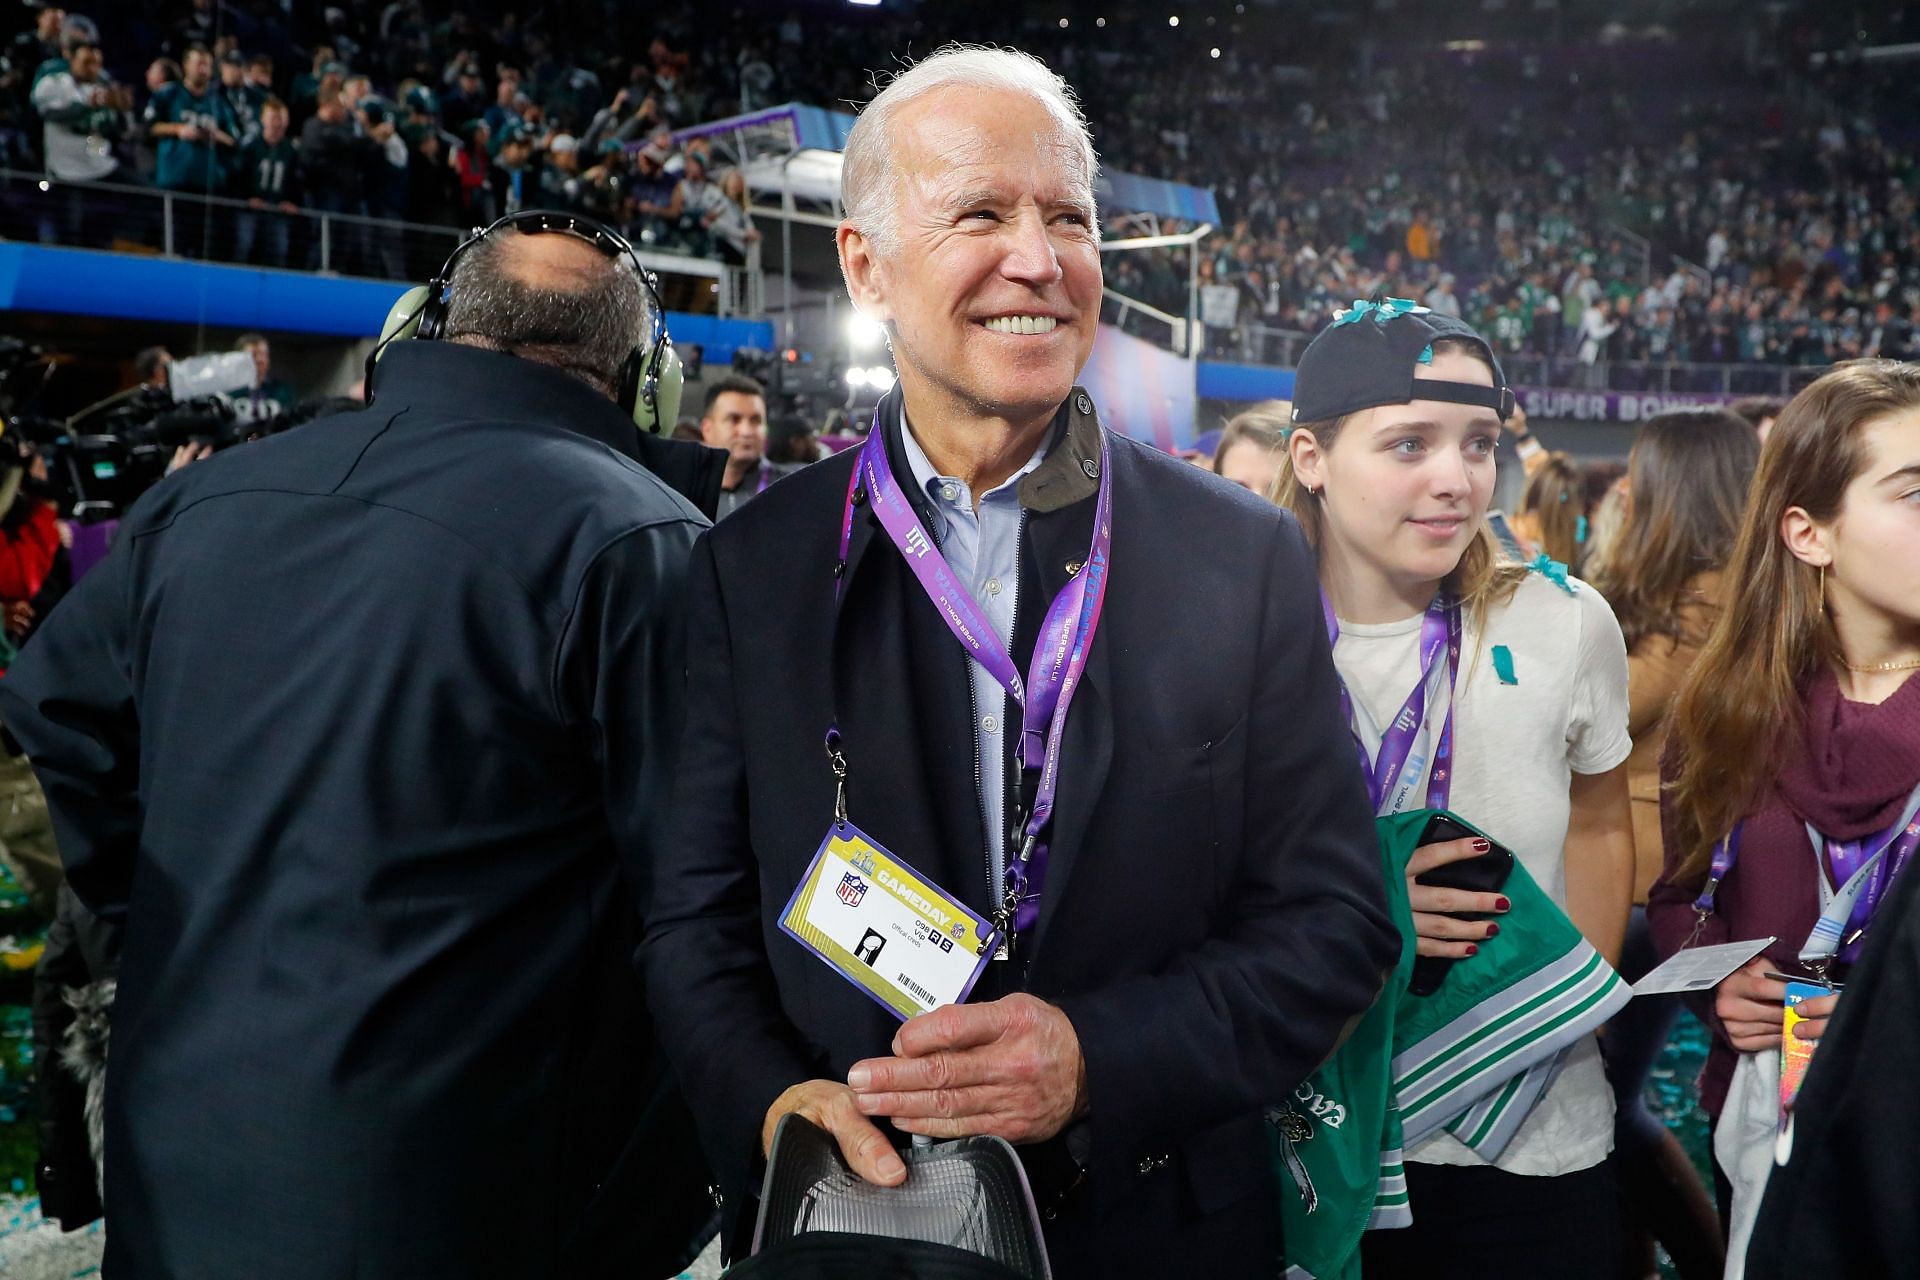 President Joe Biden Super Bowl LII